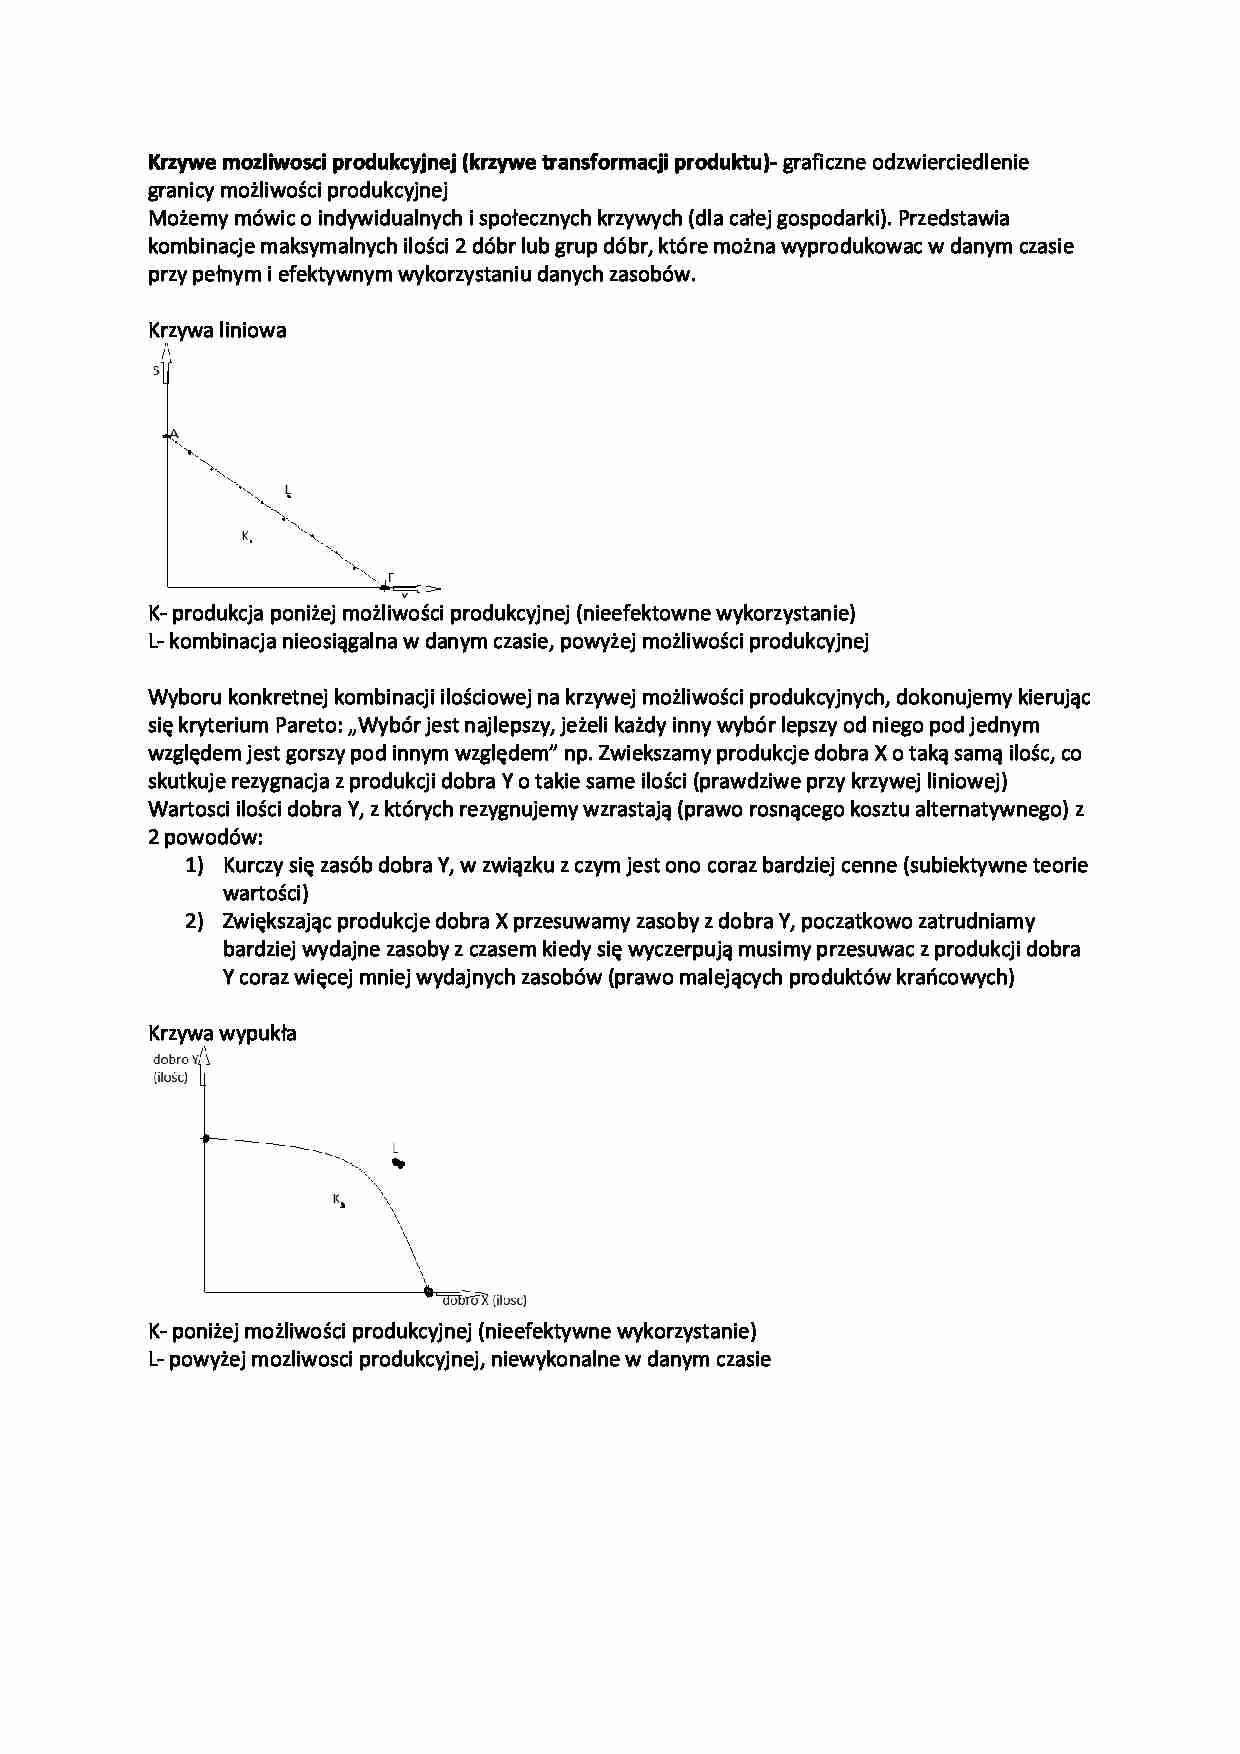 Mikroekonomia - notatki do kolokwium - strona 1